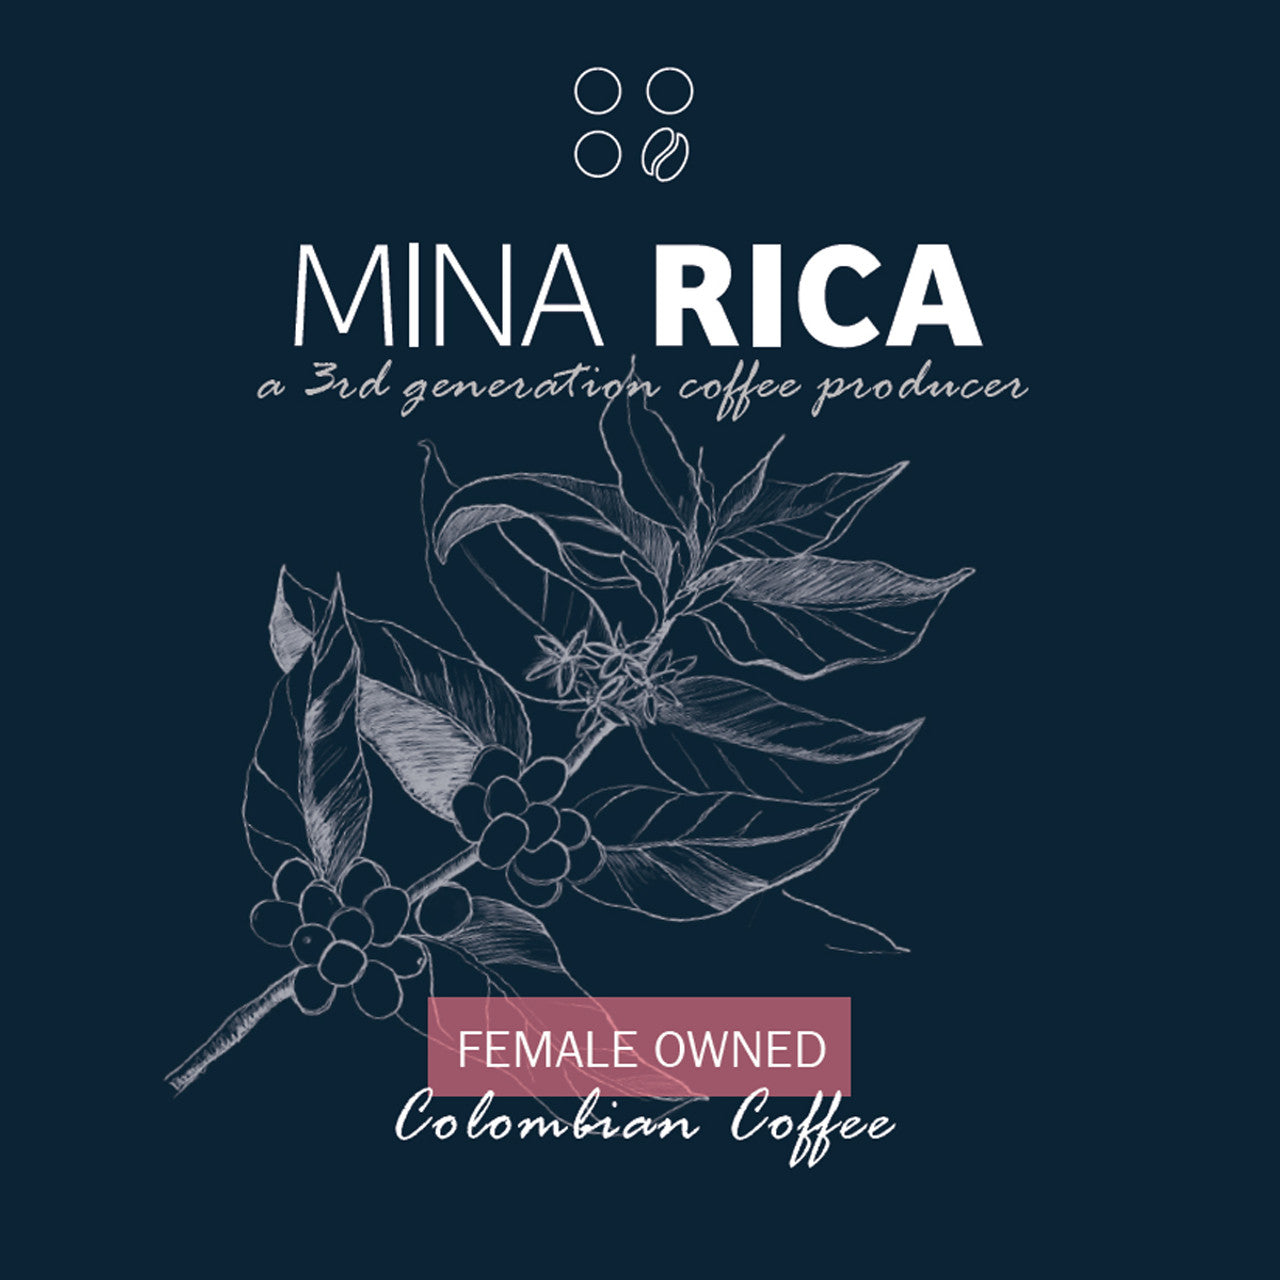 Colombia Mina Rica